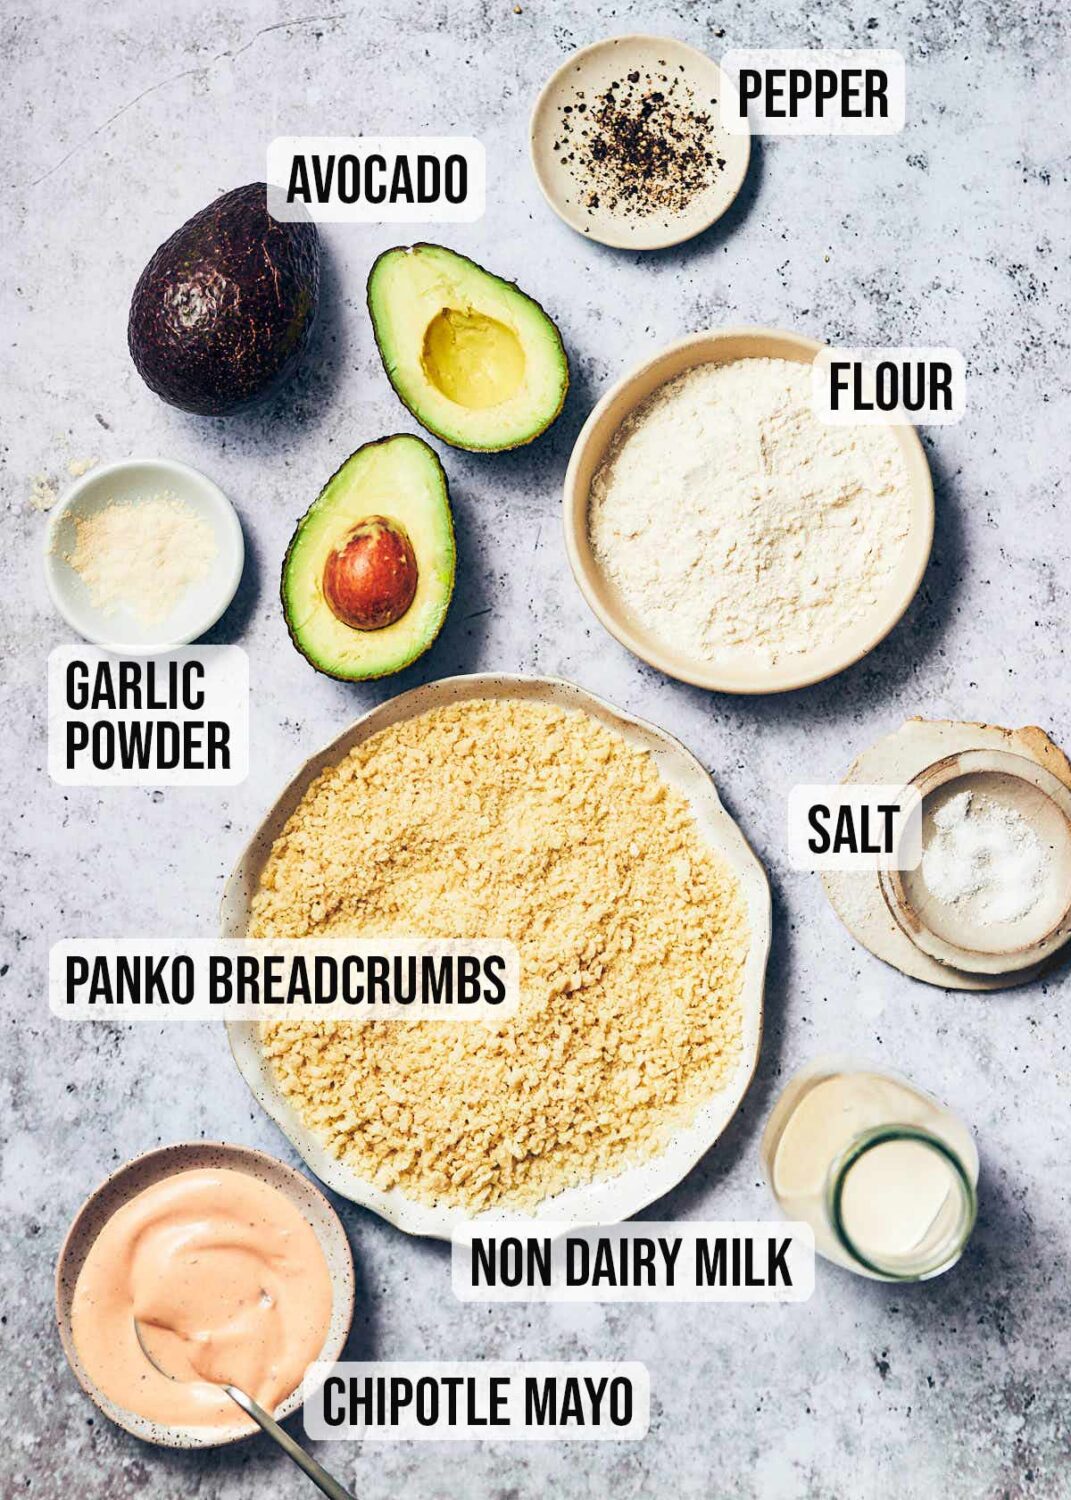 Ingredients to make crispy air fryer avocado fries: avocado, garlic powder, pepper, flour, salt, non dairy milk, panko breadcrumbs, and chipotle mayo (for dipping)